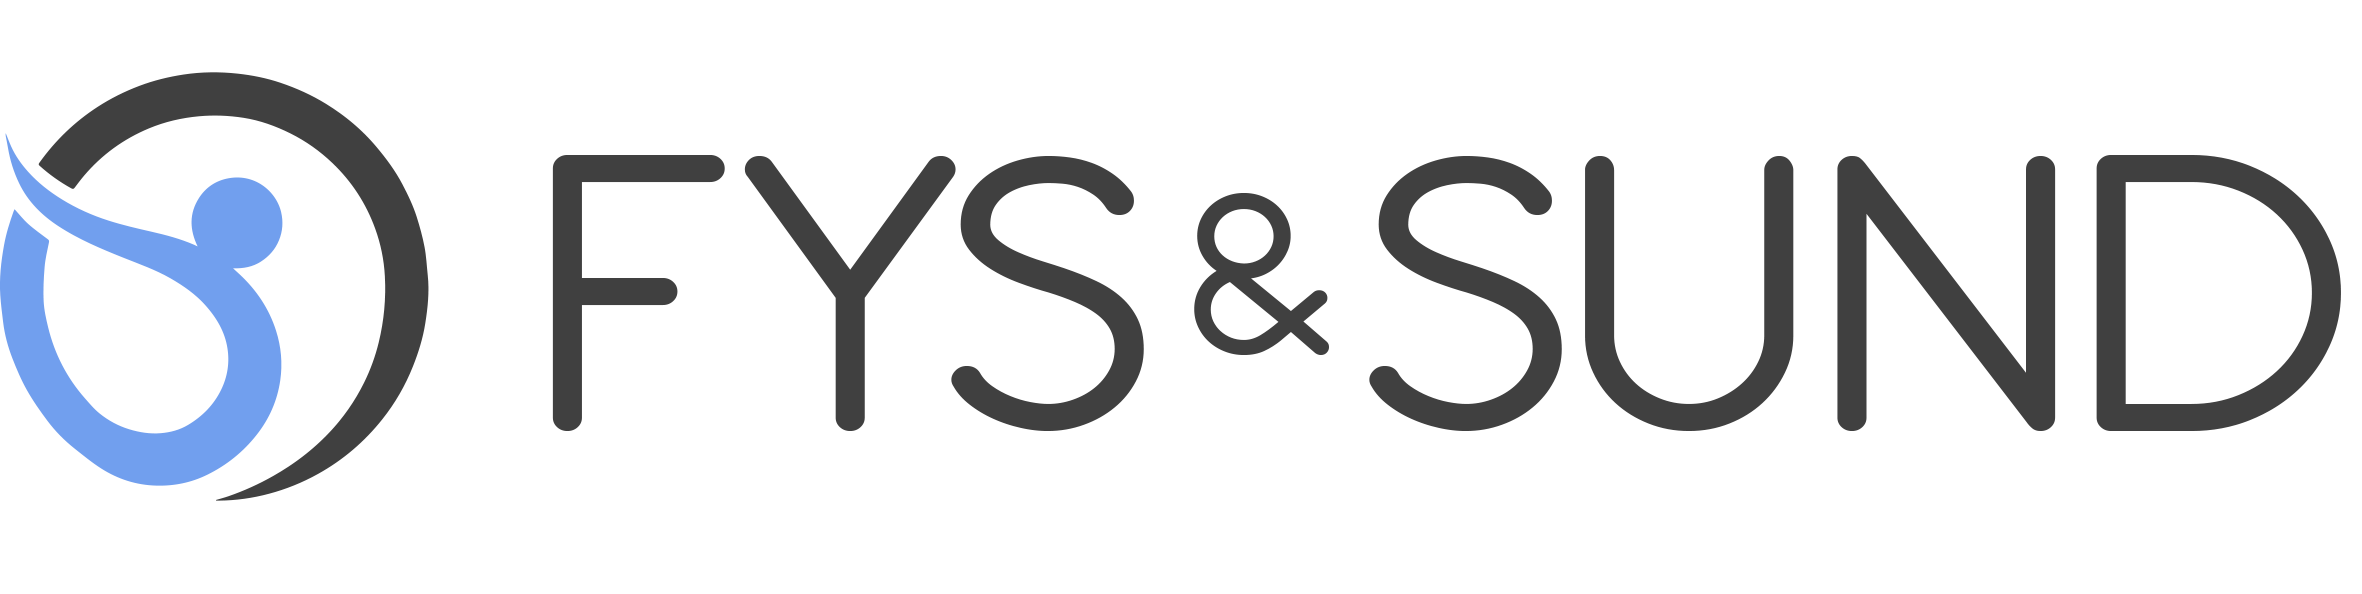 fysogsund logo 4-02 single-1